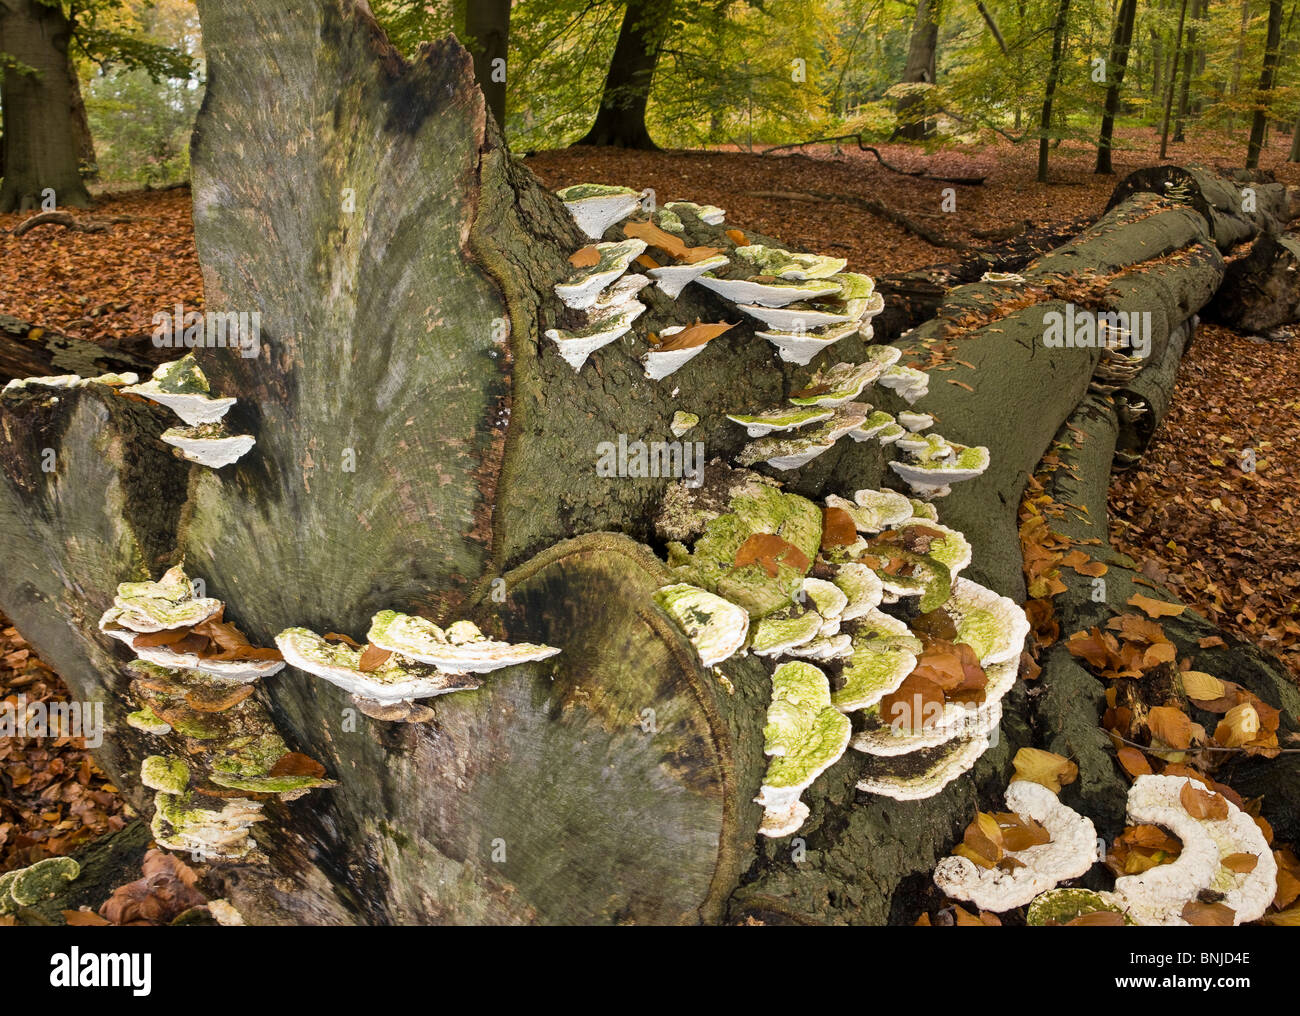 Estate Bantam s-Graveland North Holland Noord-Holland Landscape Forest Wood Trees Autumn mushrooms fungus Netherlands Nature Stock Photo